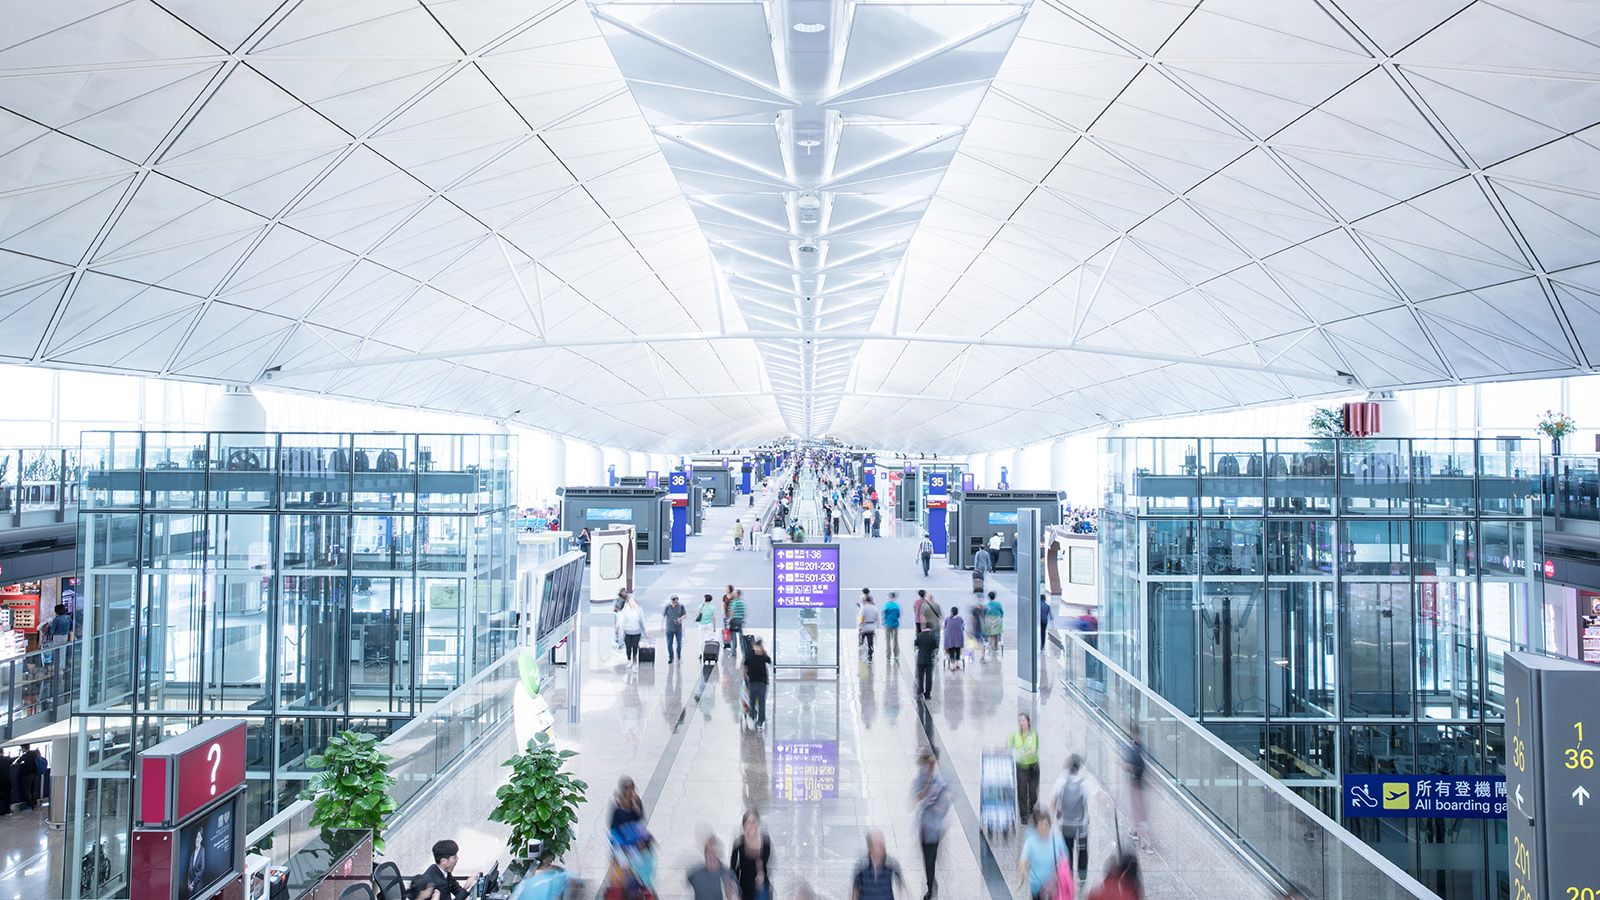 Hong Kong Airport Opens 'Skybridge' in Preparation for Revival - Bloomberg